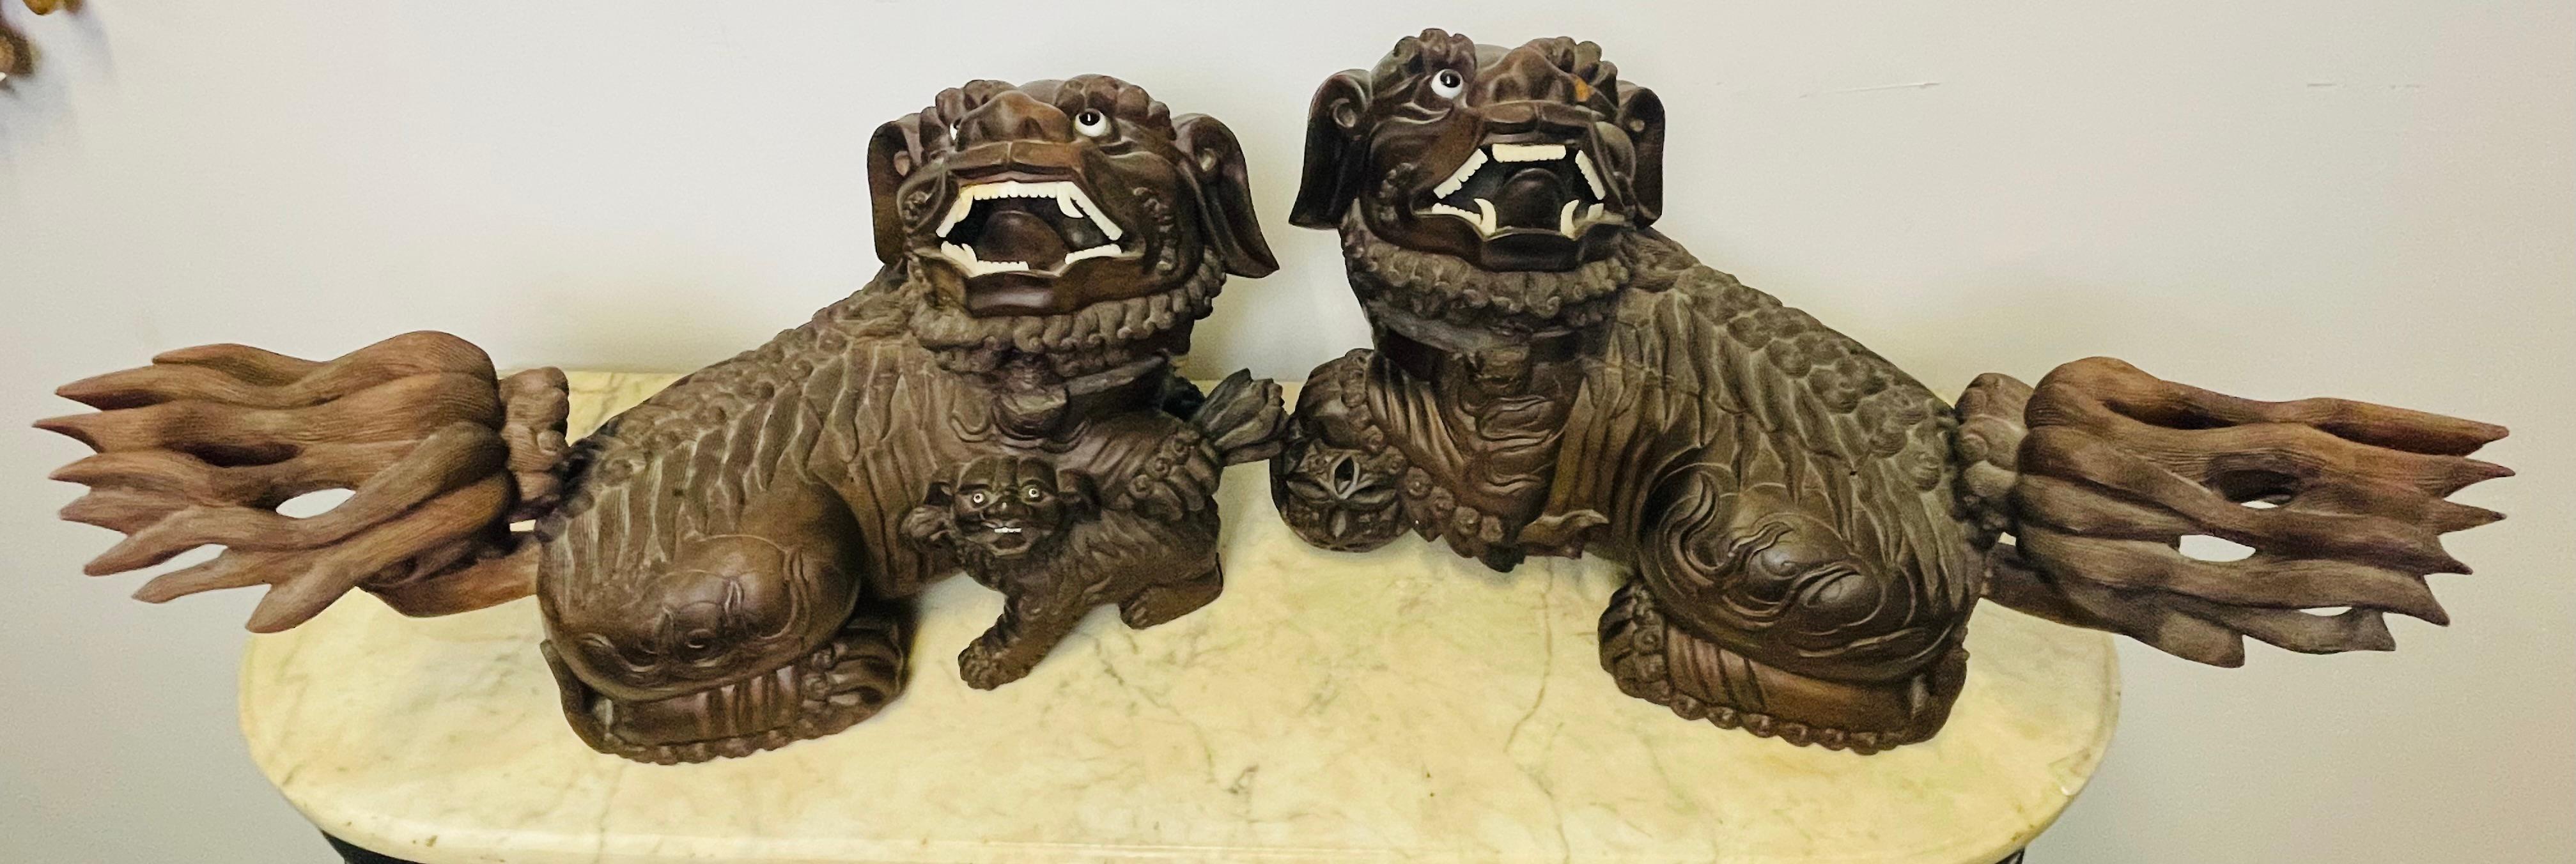 Paar Foo-Hunde aus massivem Teakholz aus dem 18./19. Jahrhundert, Opposing, Bildhauerei im Angebot 9